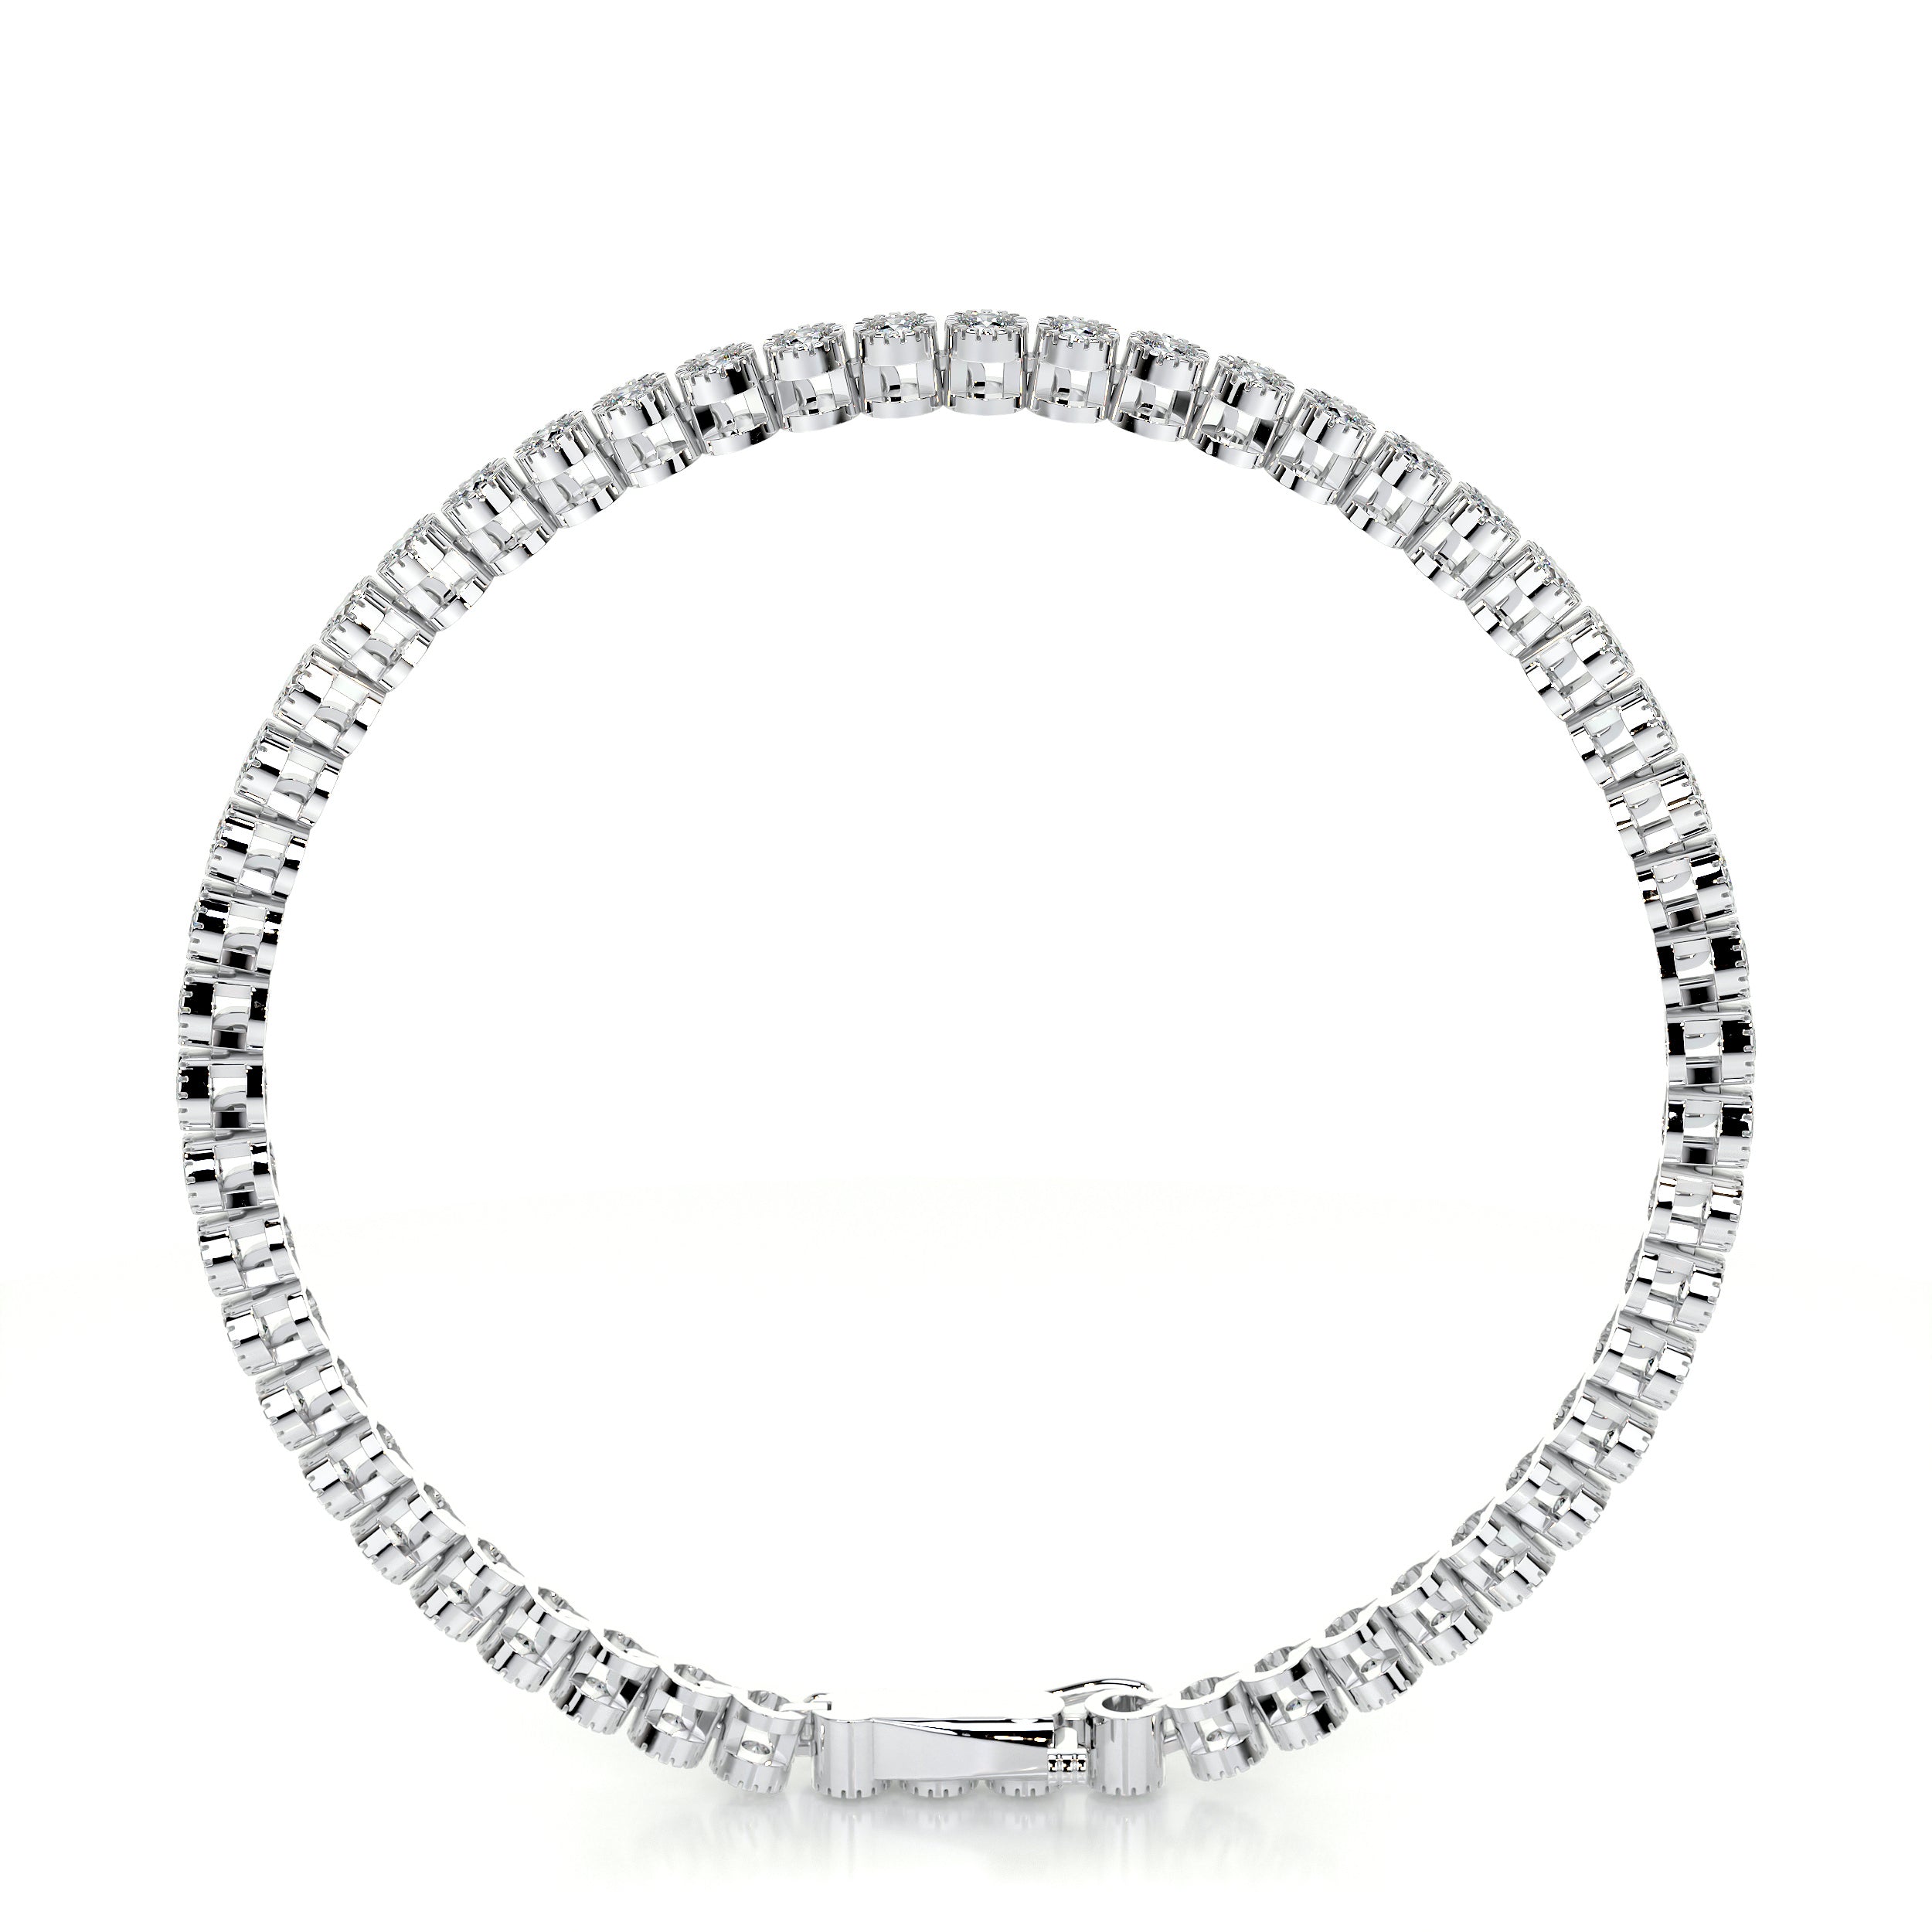 Laura Diamond Tennis Bracelet   (1.50 Carat) -14K White Gold